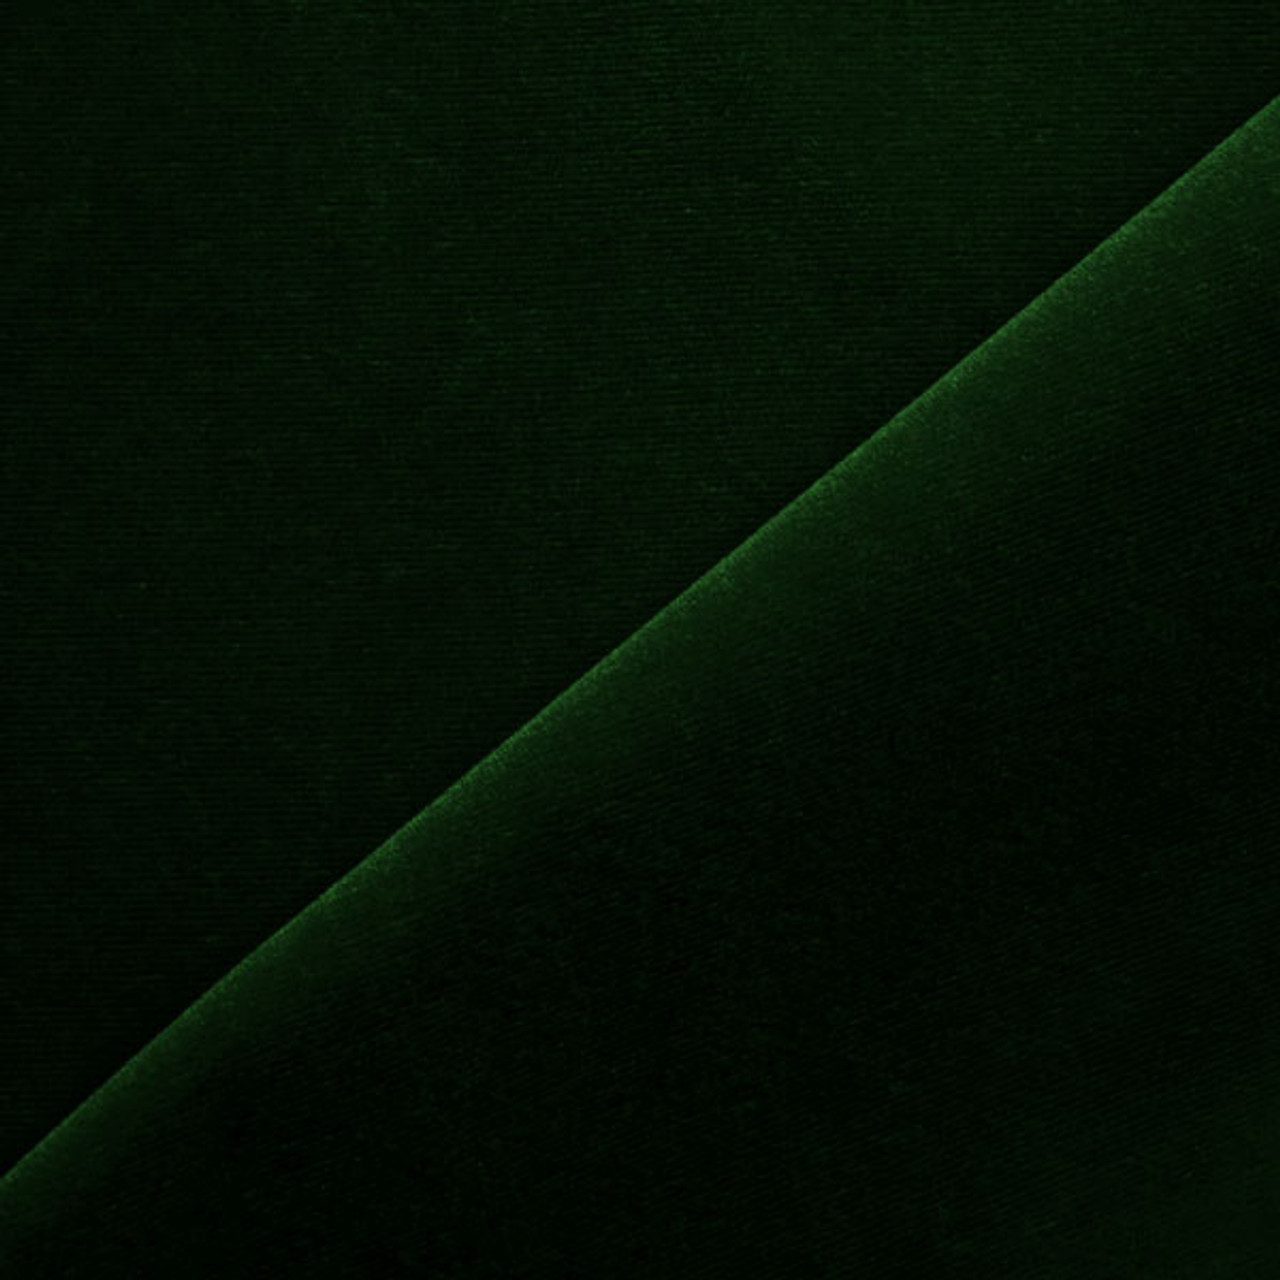 Hunter Green Stretch Velvet Fabric Fabric By The Yard